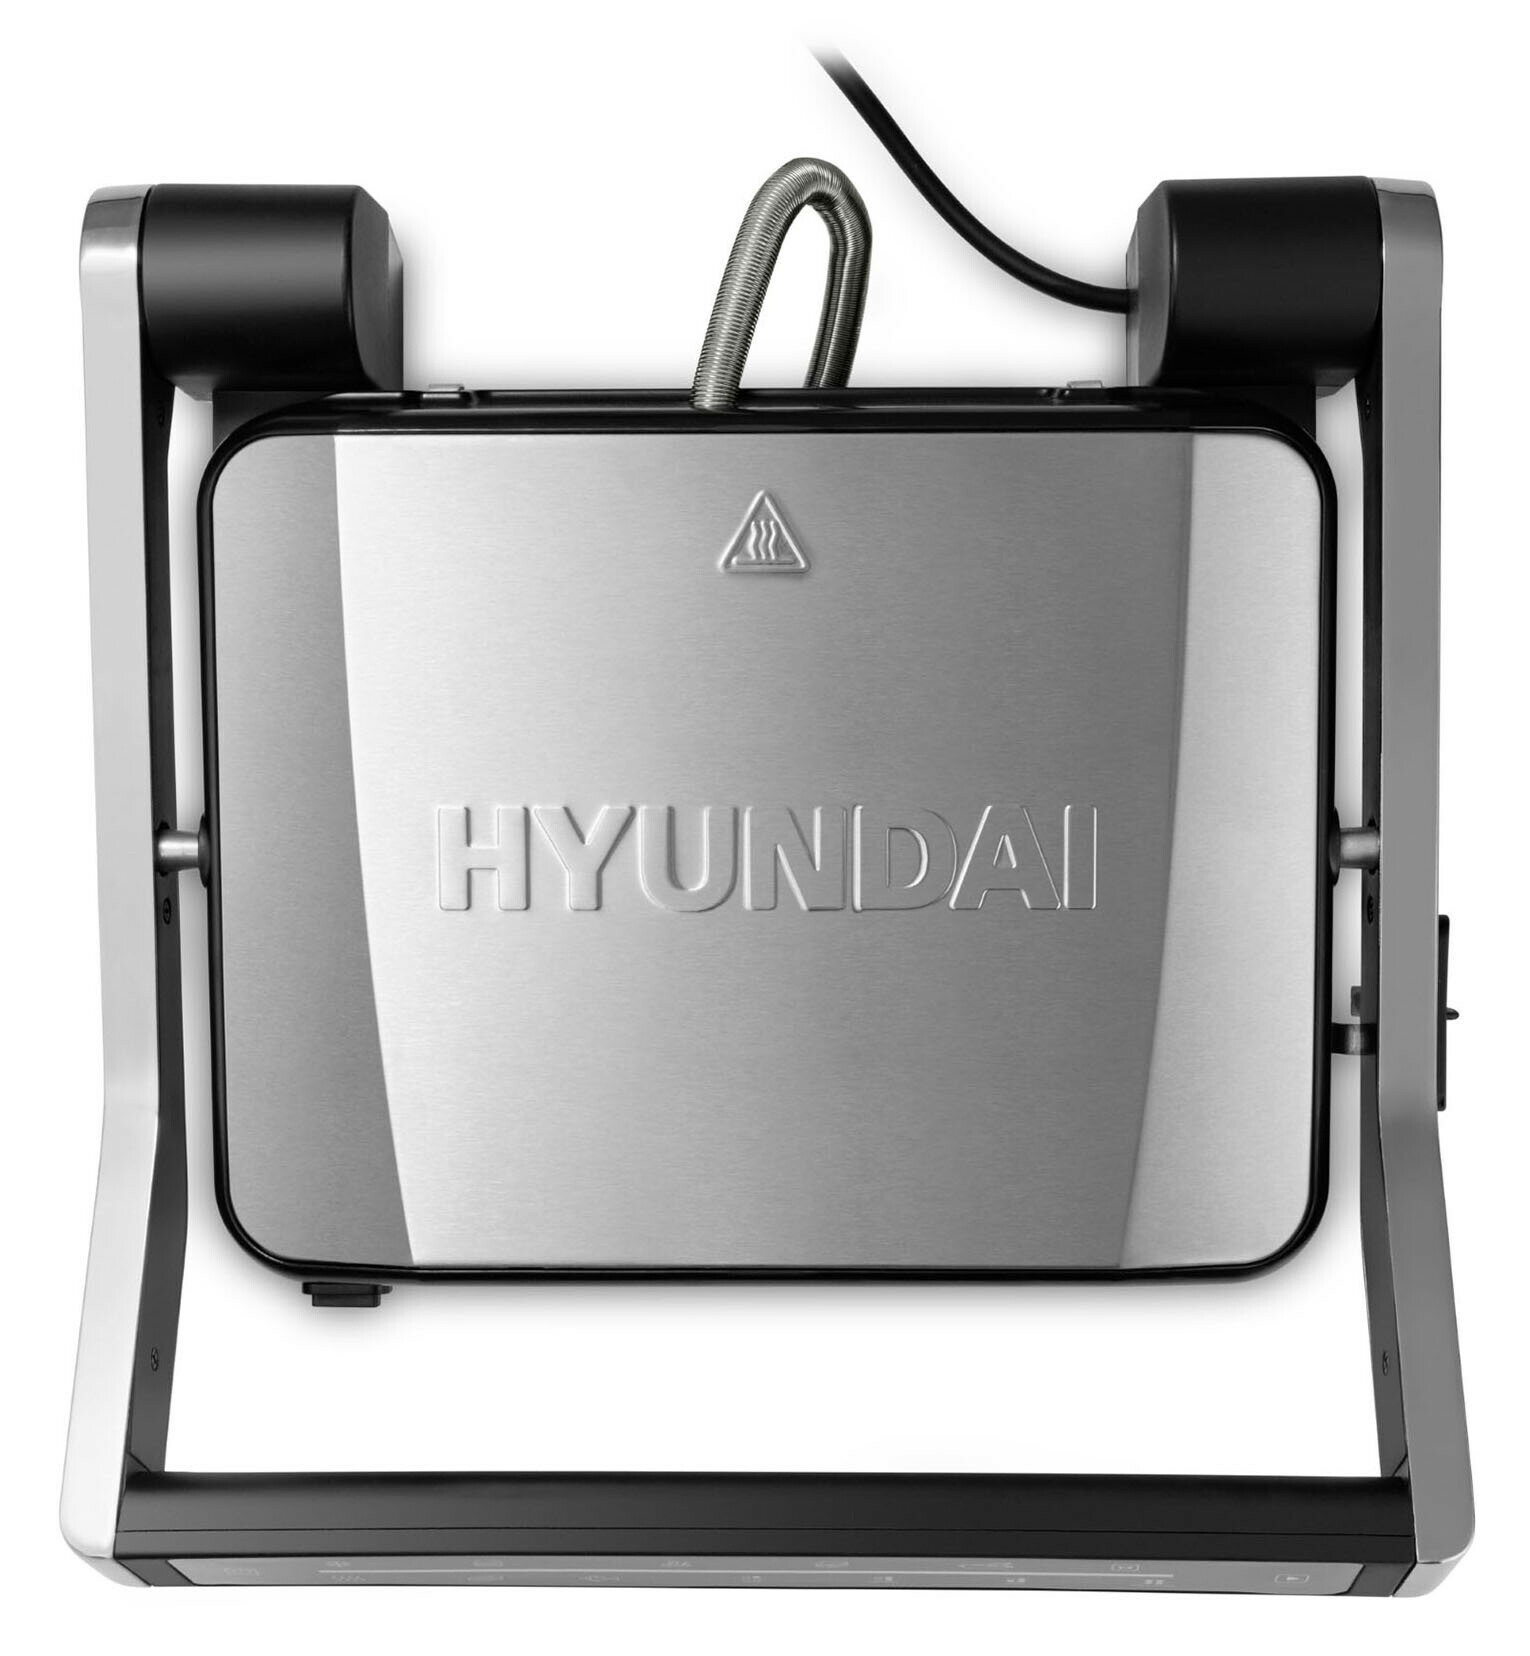 Электрогриль Hyundai HYG-3022 серебристый/черный